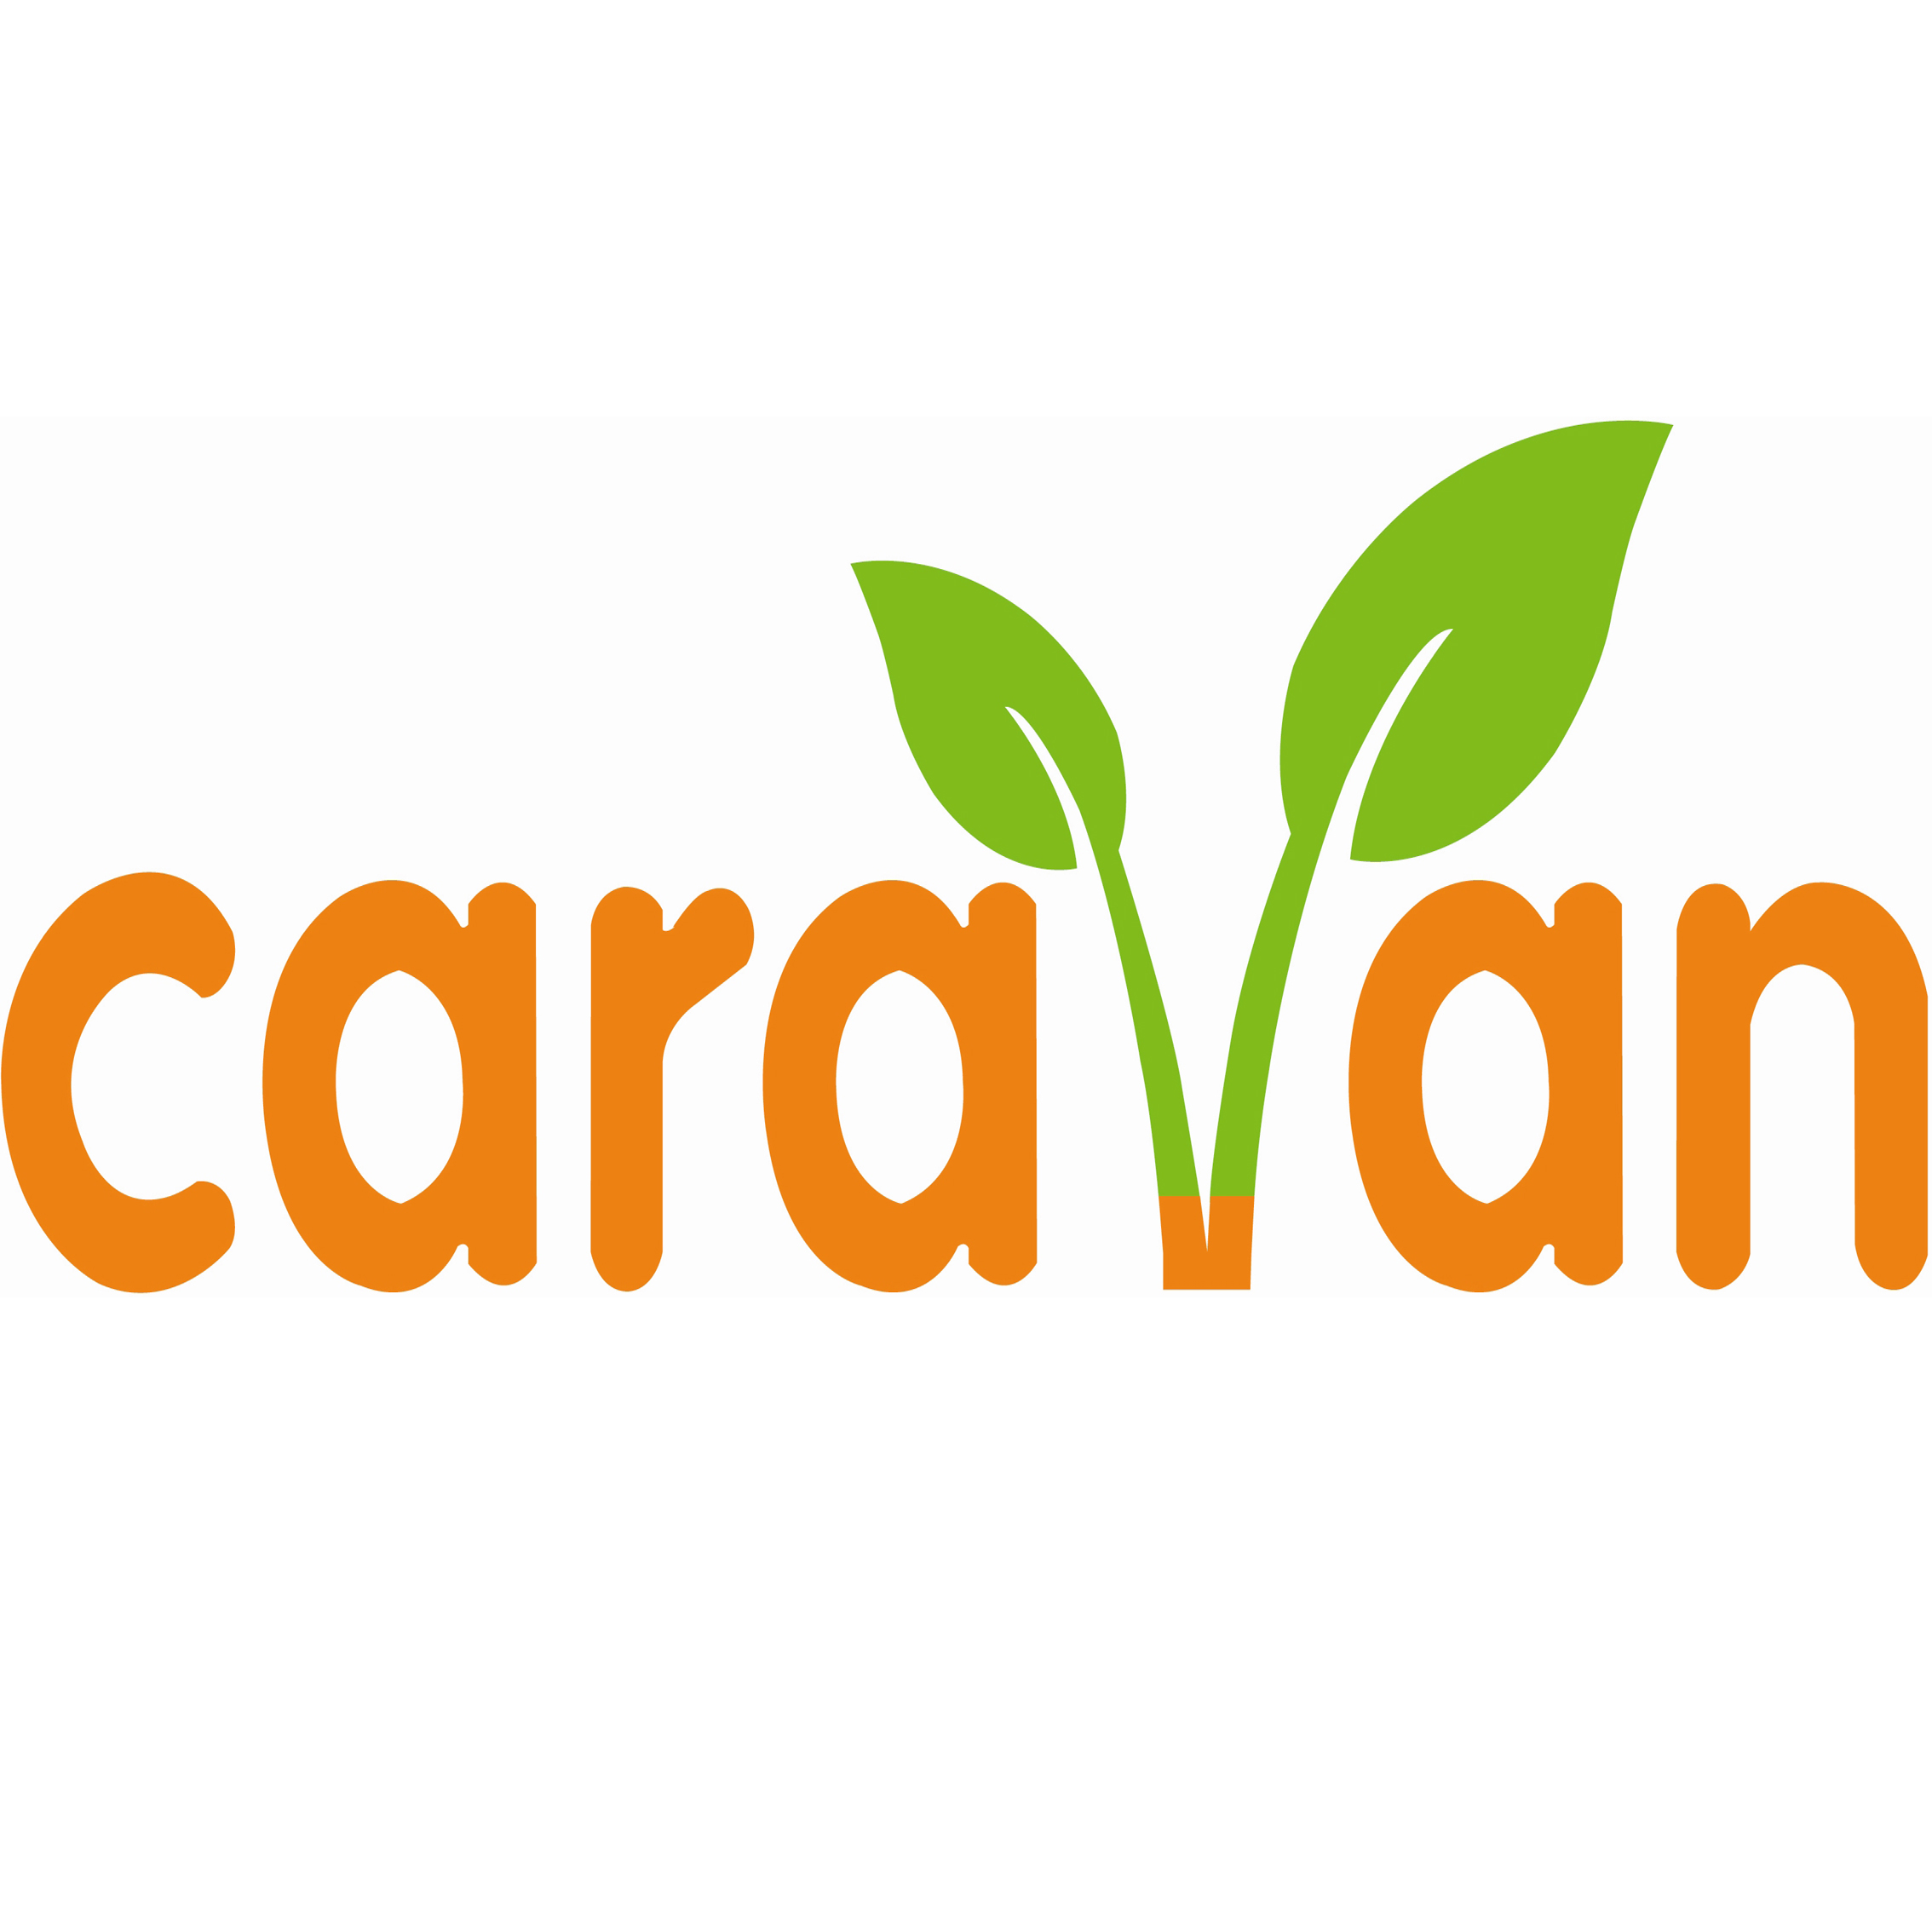 Caravan Co.,Ltd